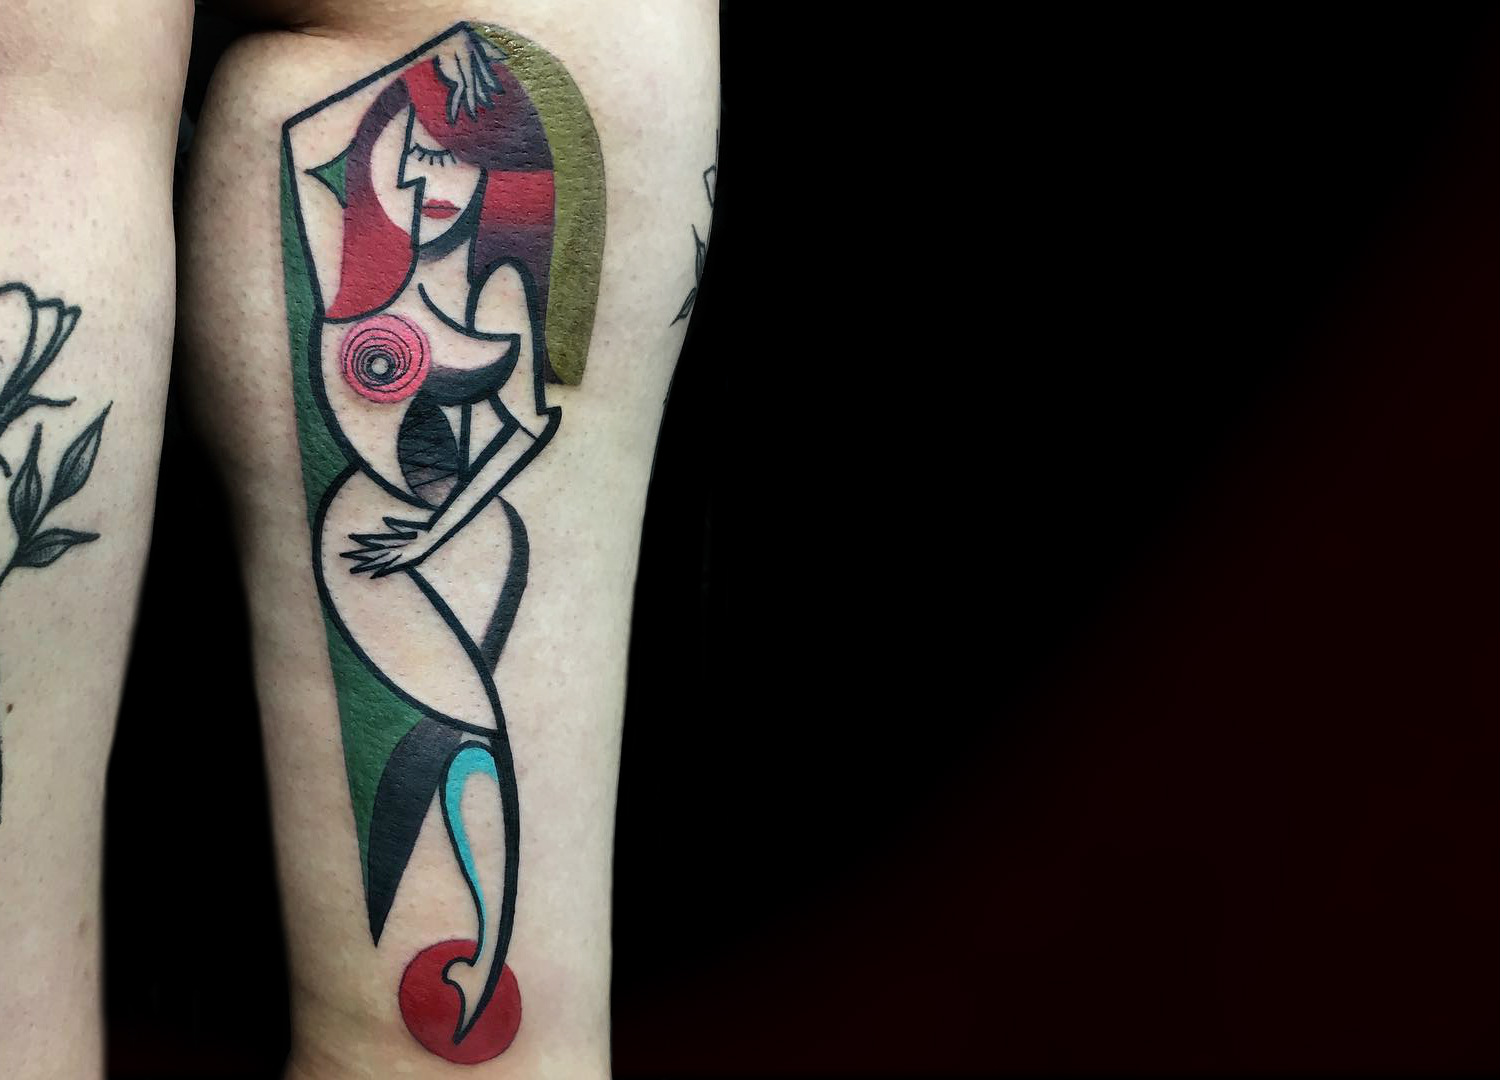 Cubist woman tattoo design by Mike Boyd